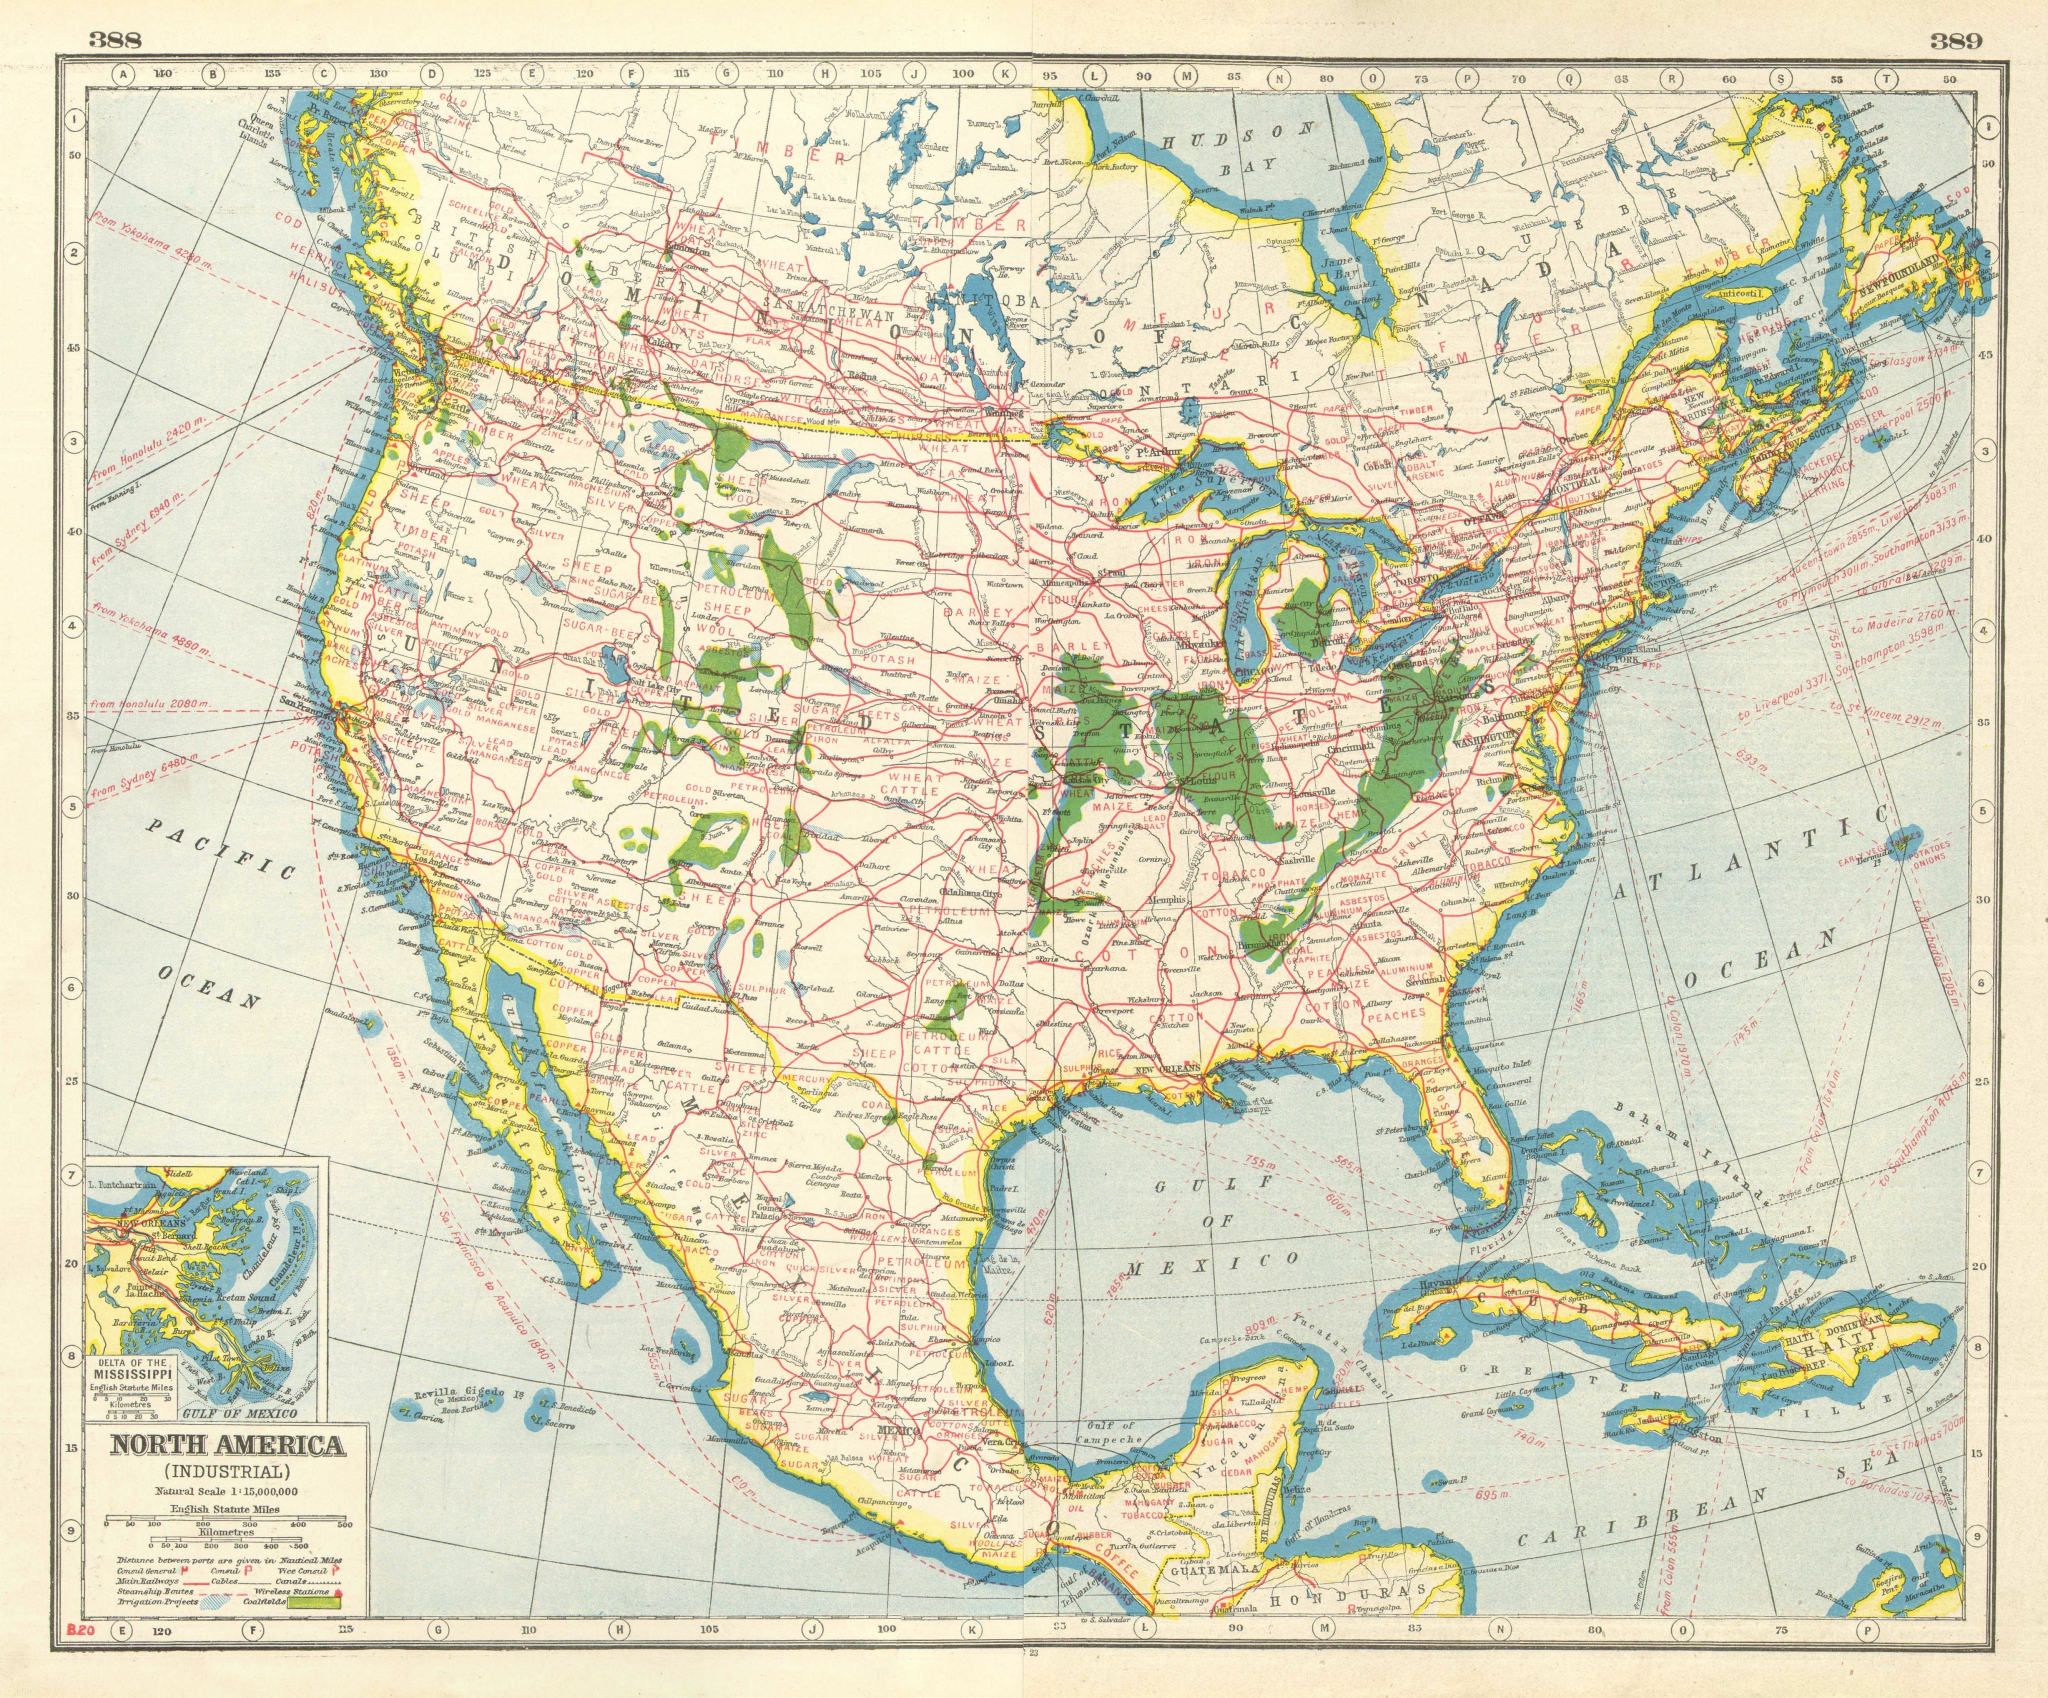 Associate Product NORTH AMERICA INDUSTRIES. USA Canada. Coalfields Irrigation Railroads 1920 map